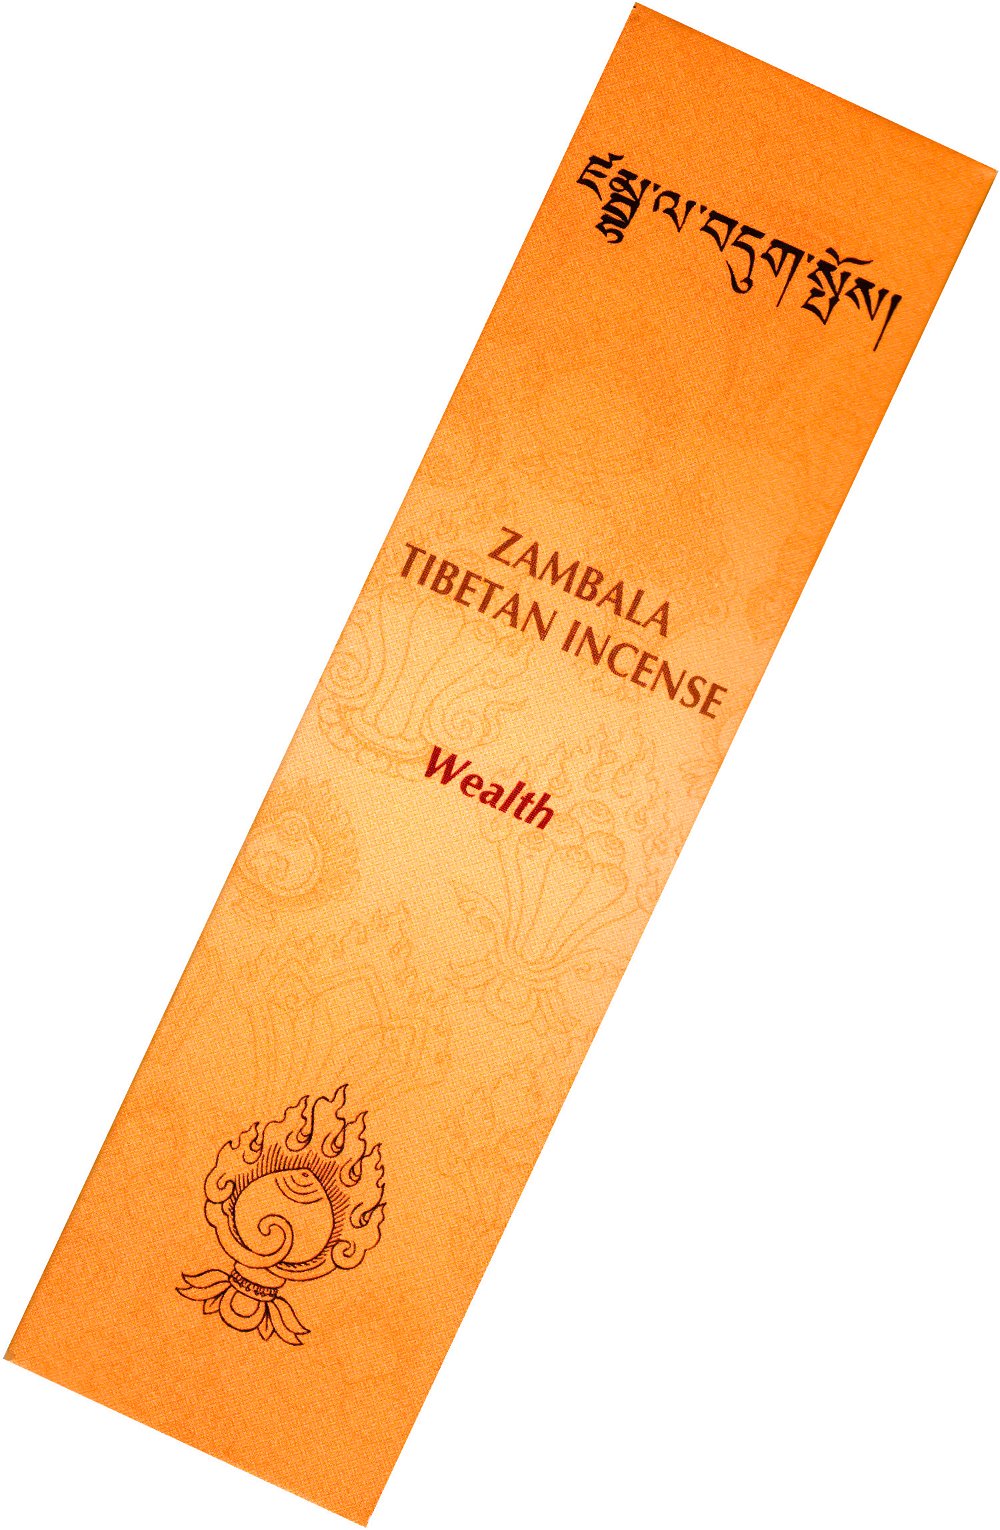 Благовоние Zambala Tibetan Incense (Замбала), 20 палочек по 13,5 см, 20, Замбала